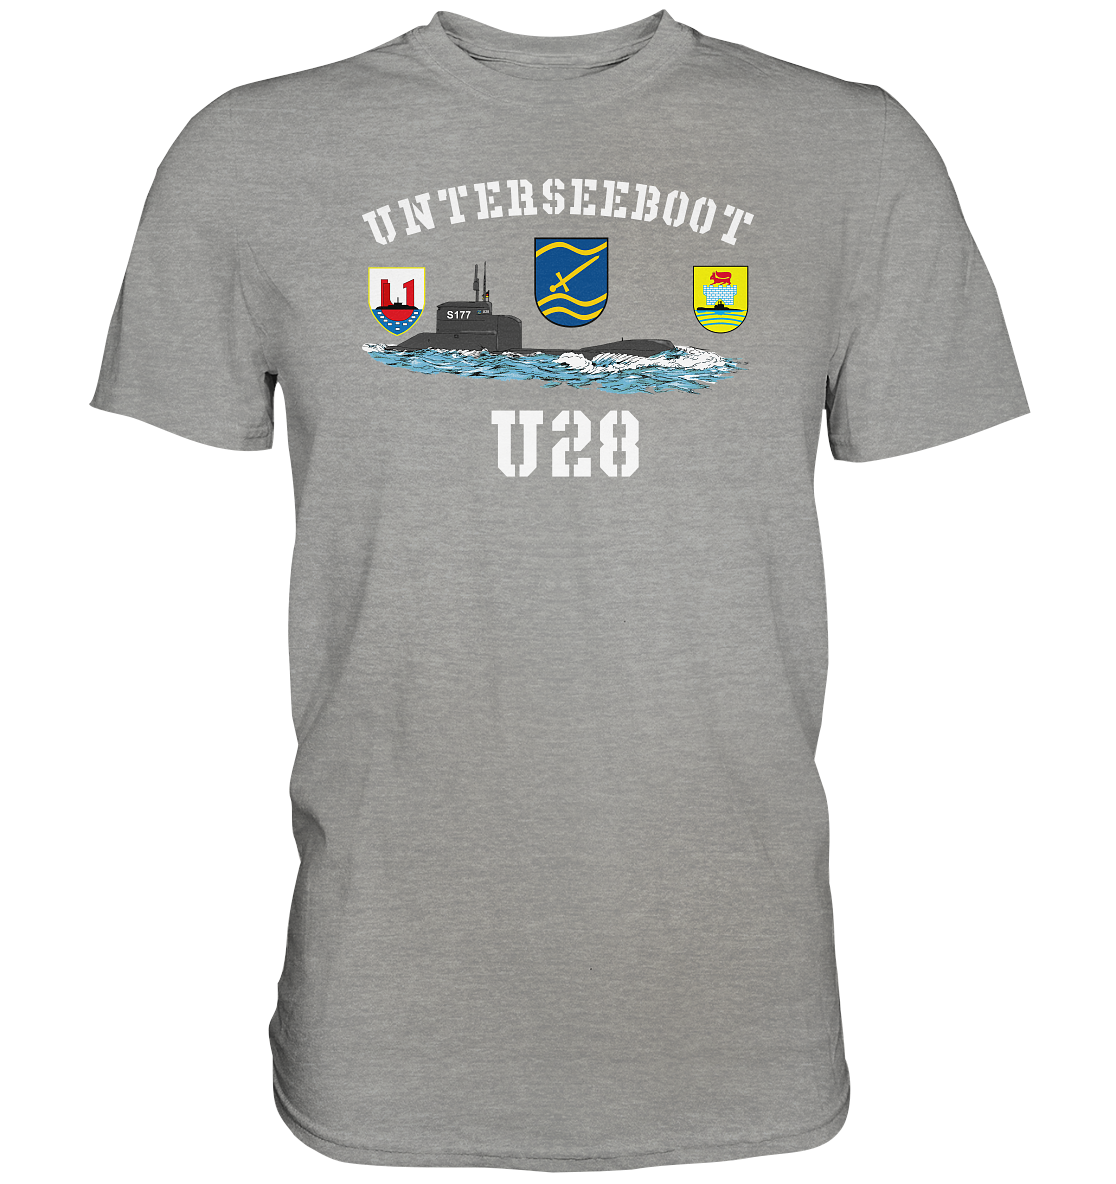 Unterseeboot U28 - Premium Shirt